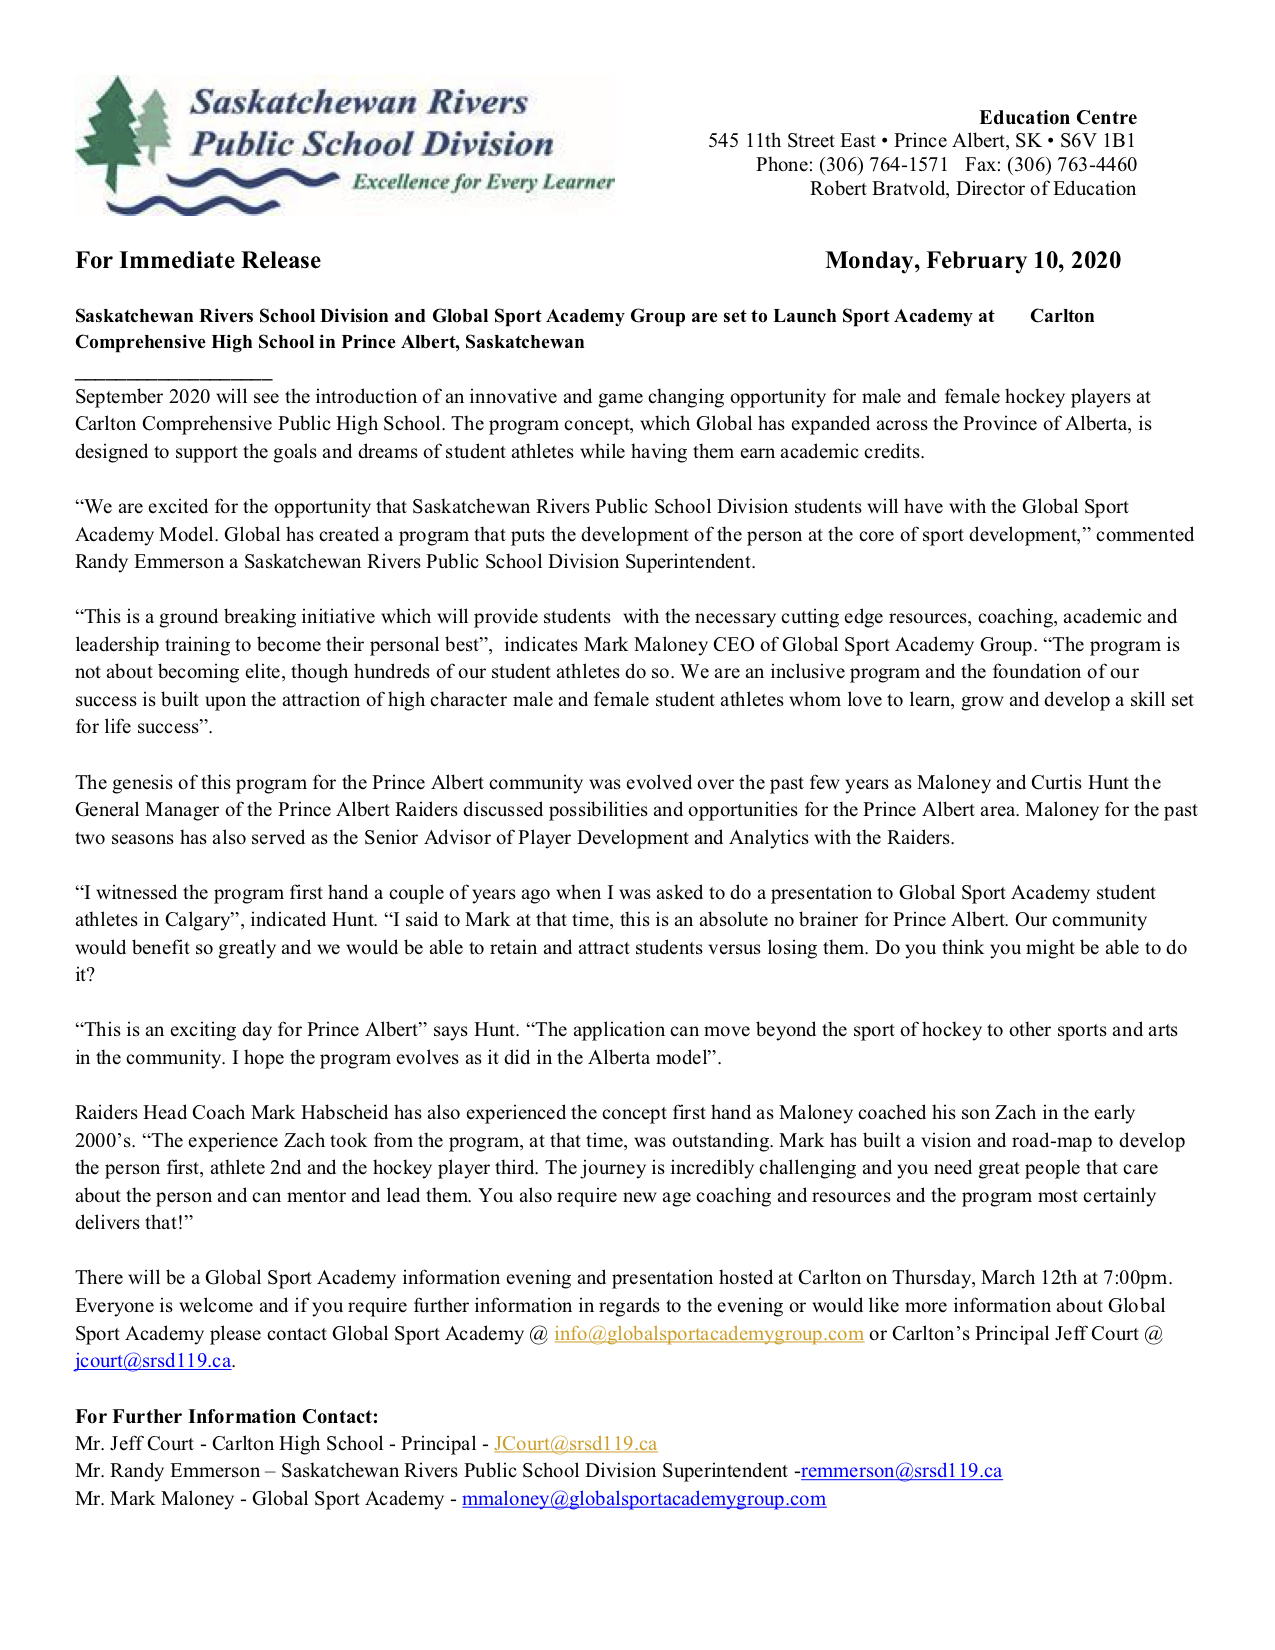 :News:Media Release Global Sport Academy and Saskatchewan Rivers Public School Division